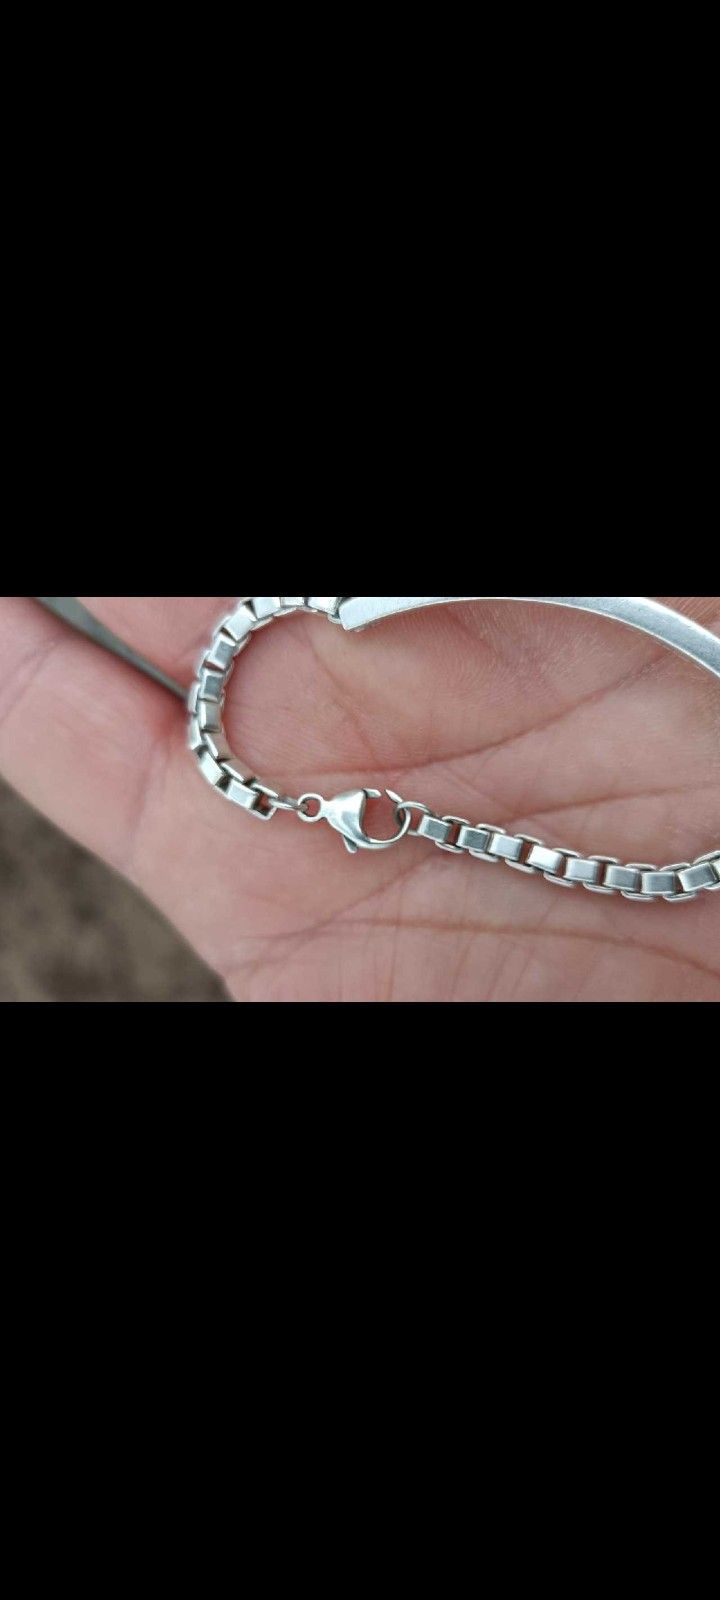 Tiffany & Co Authentic Bangle Bracelet Venetian Link